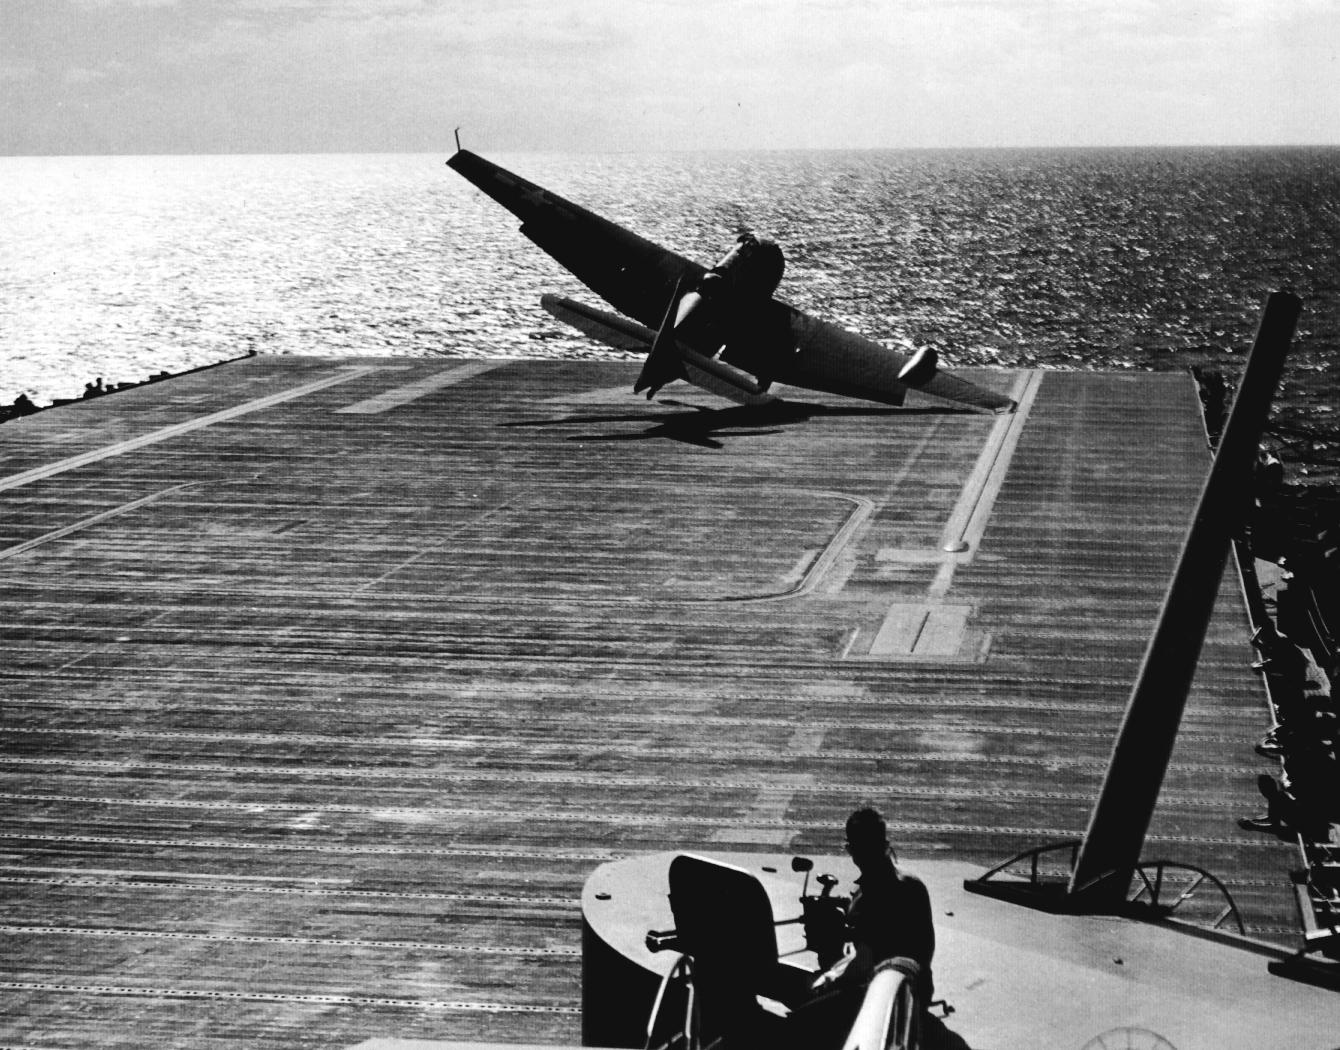 US Navy pilot Lt (jg) C. Clifton Francom unsuccessfully testing TBM Avenger torpedo bomber with experimental wing mounted radome aboard Ticonderoga, 4 Jul 1944, photo 1 of 5